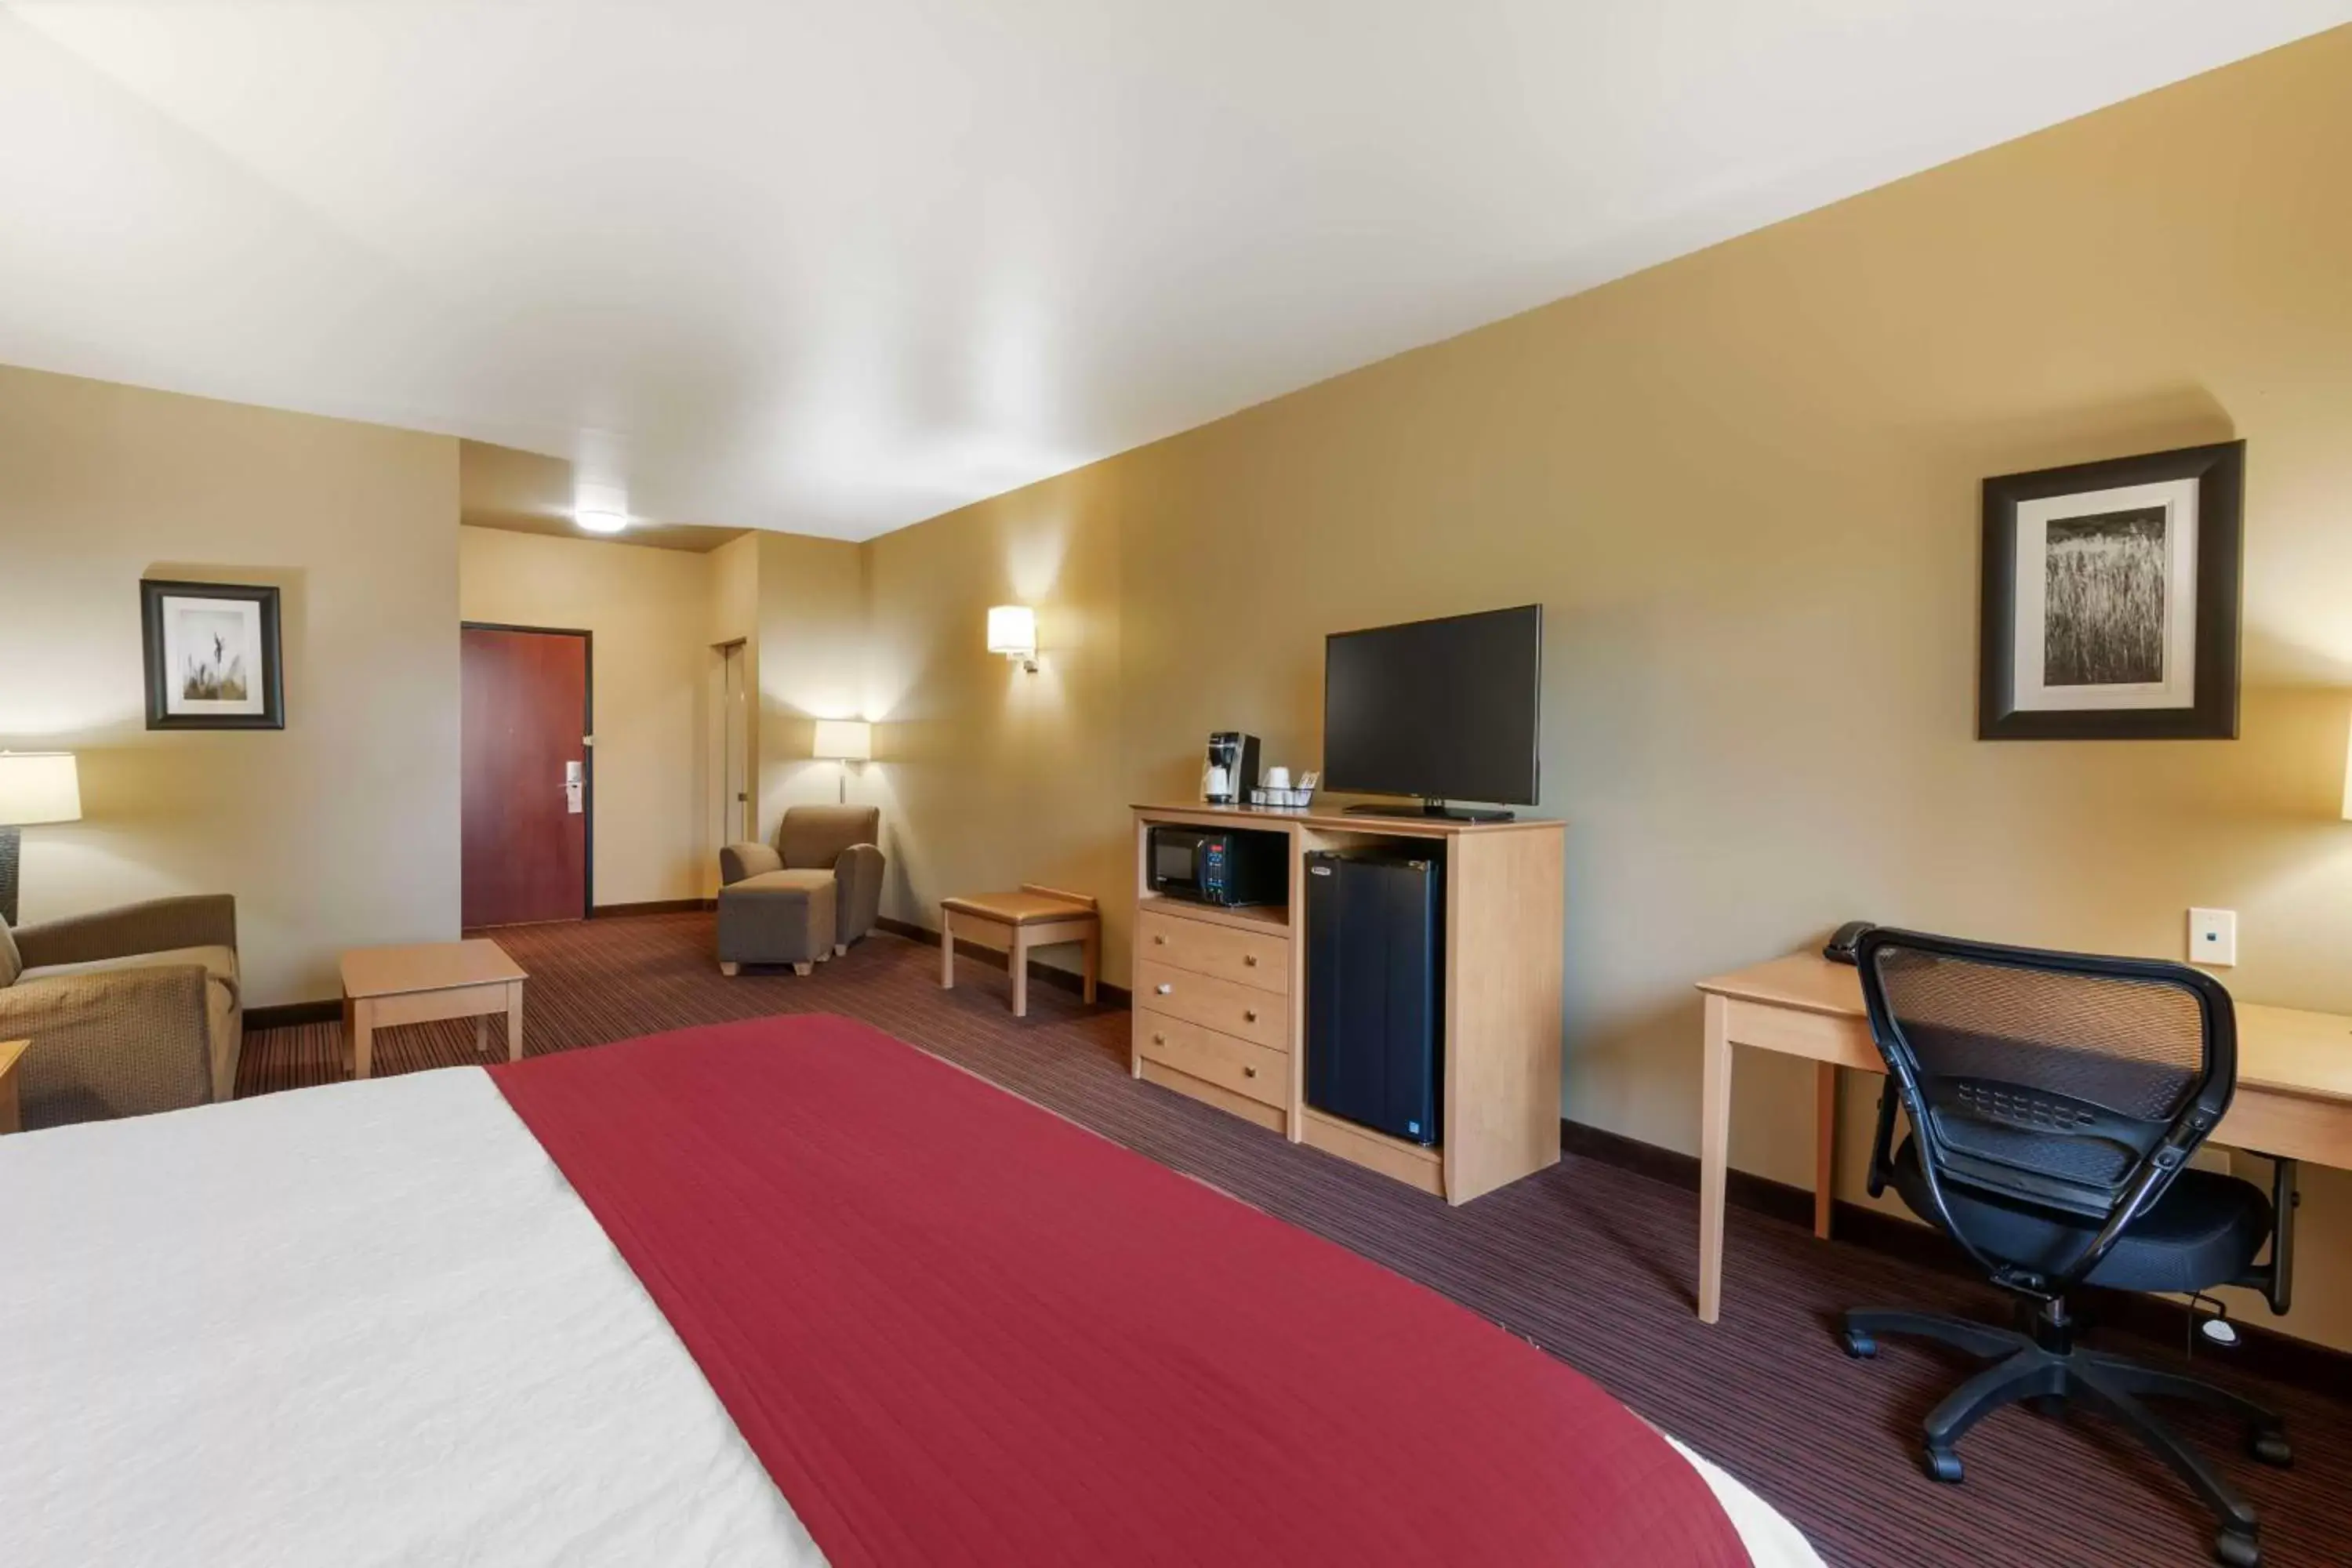 Bedroom, TV/Entertainment Center in Best Western Golden Prairie Inn and Suites